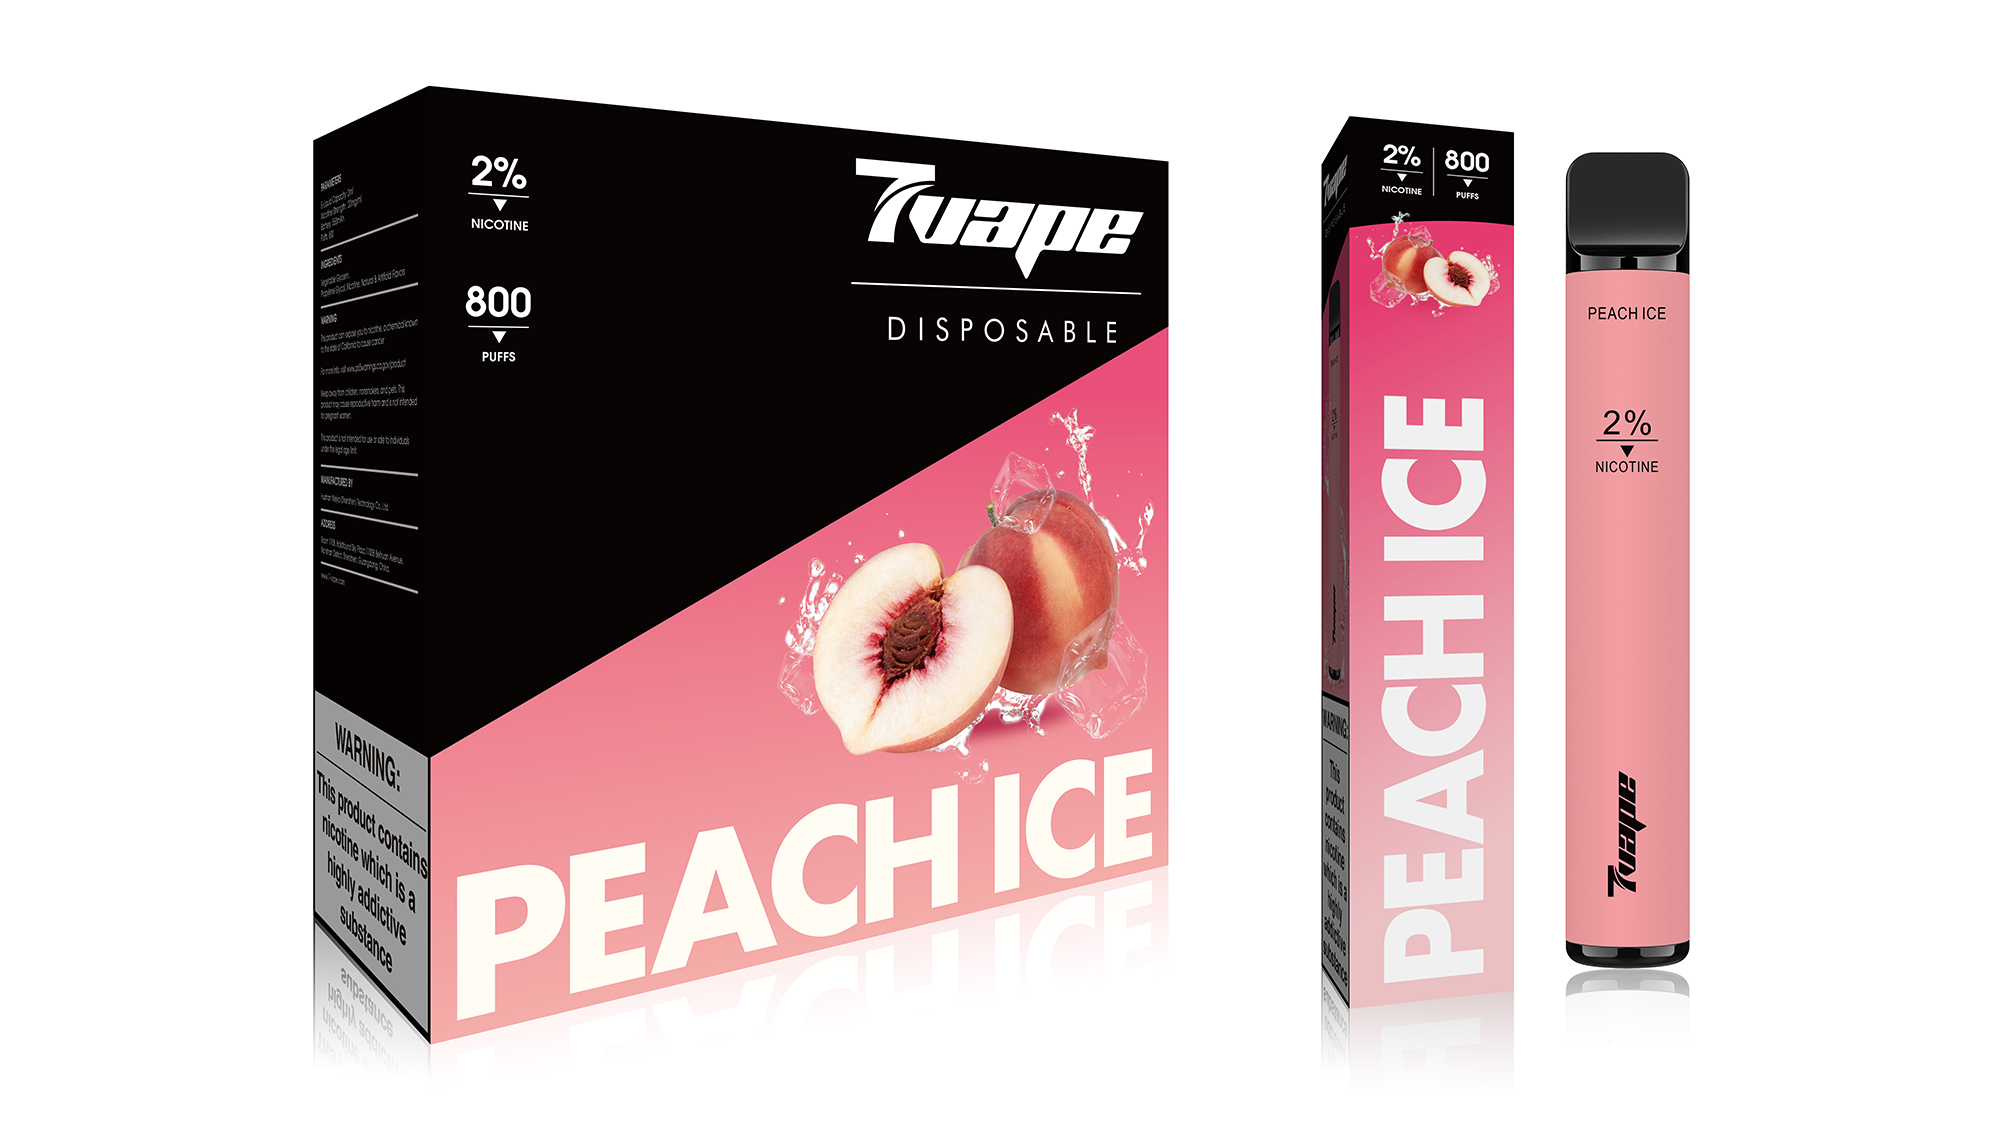 7VAPE disposable vape, peach ice vape, 800 puffs, 2% nicotine, 7-VAPE BAR